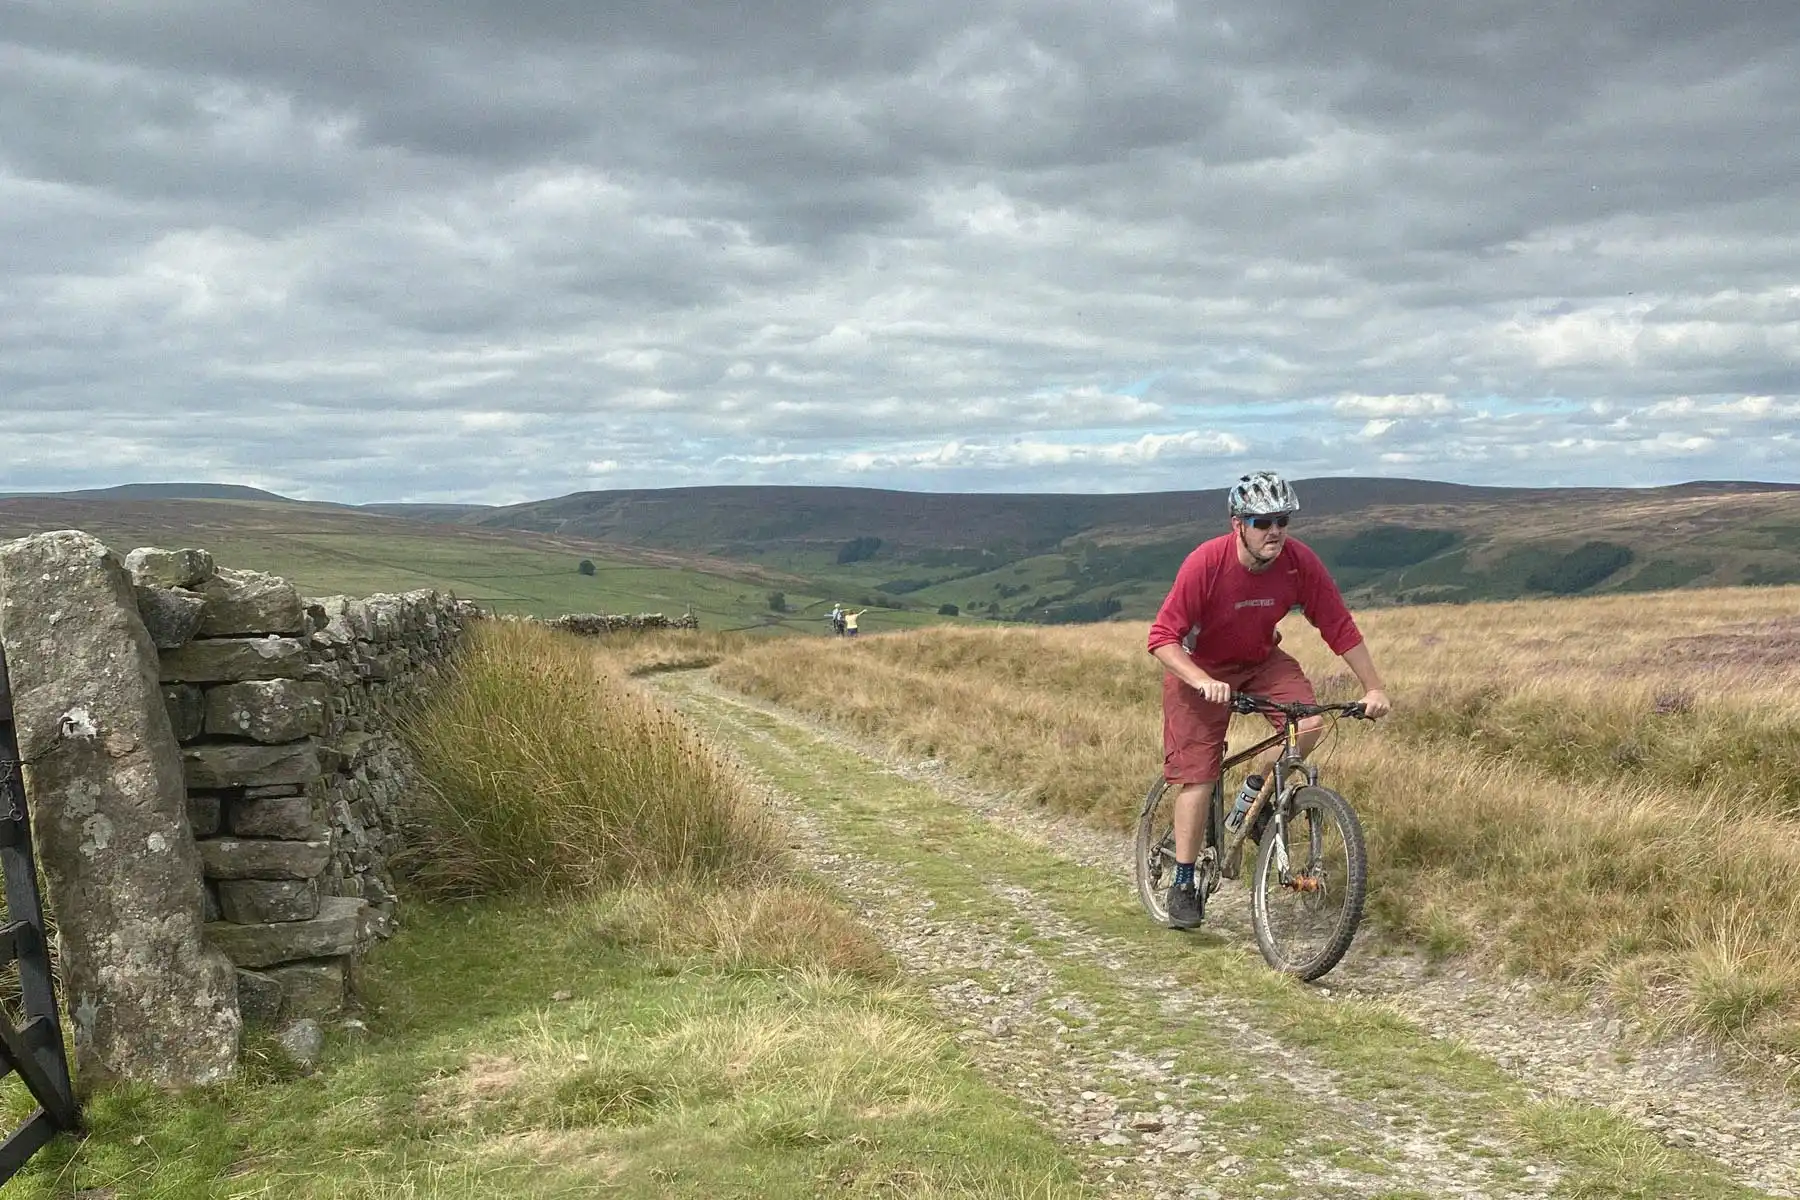 Mountain Biking with stunning views in North Yorkshire